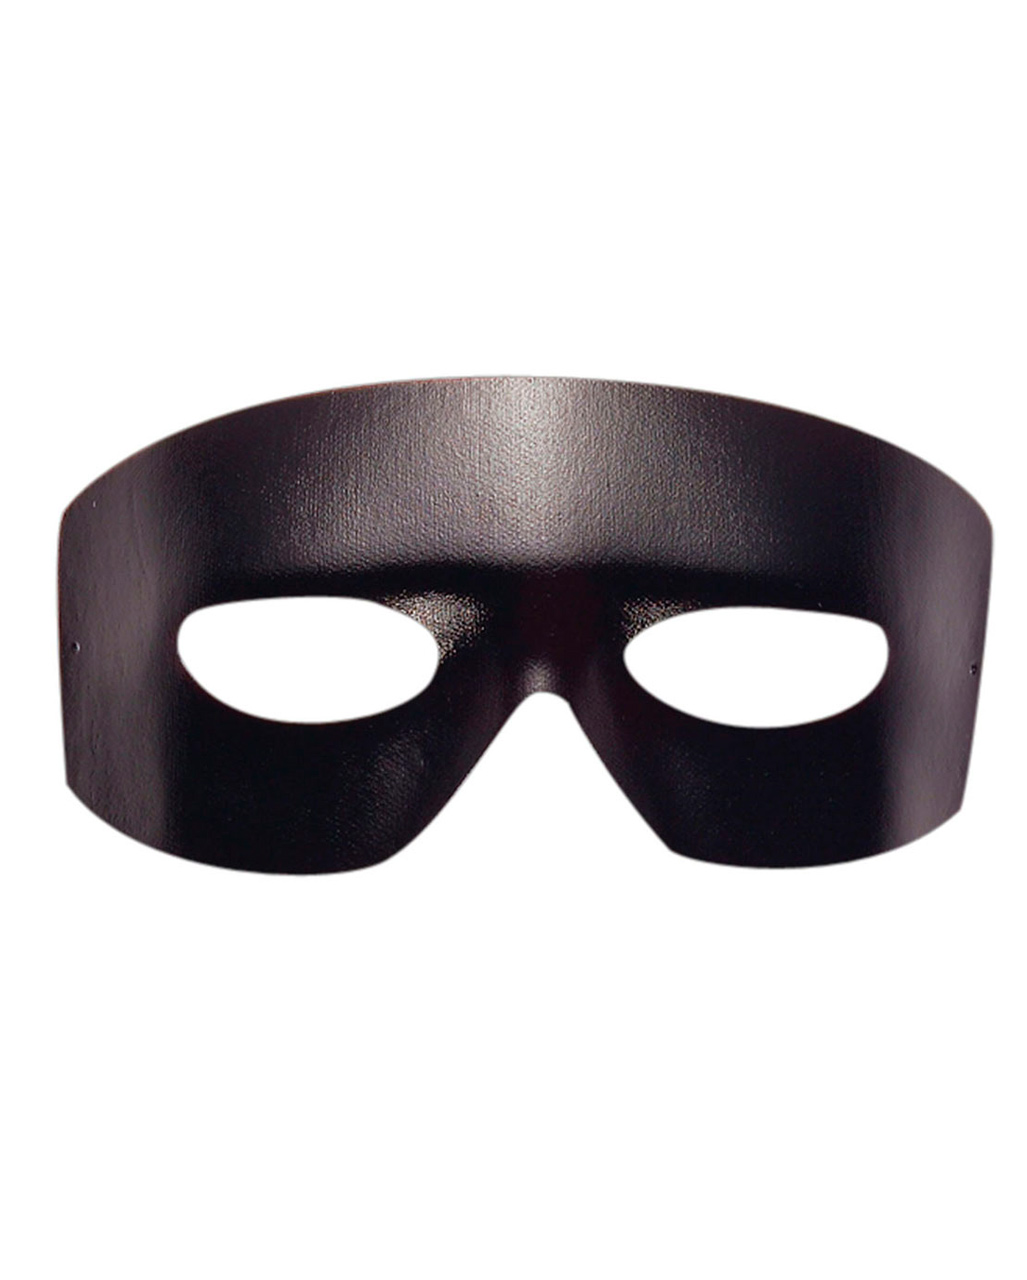 salaris Verdachte alleen Zorro Mask In Leather Look Caballero eye mask | Horror-Shop.com